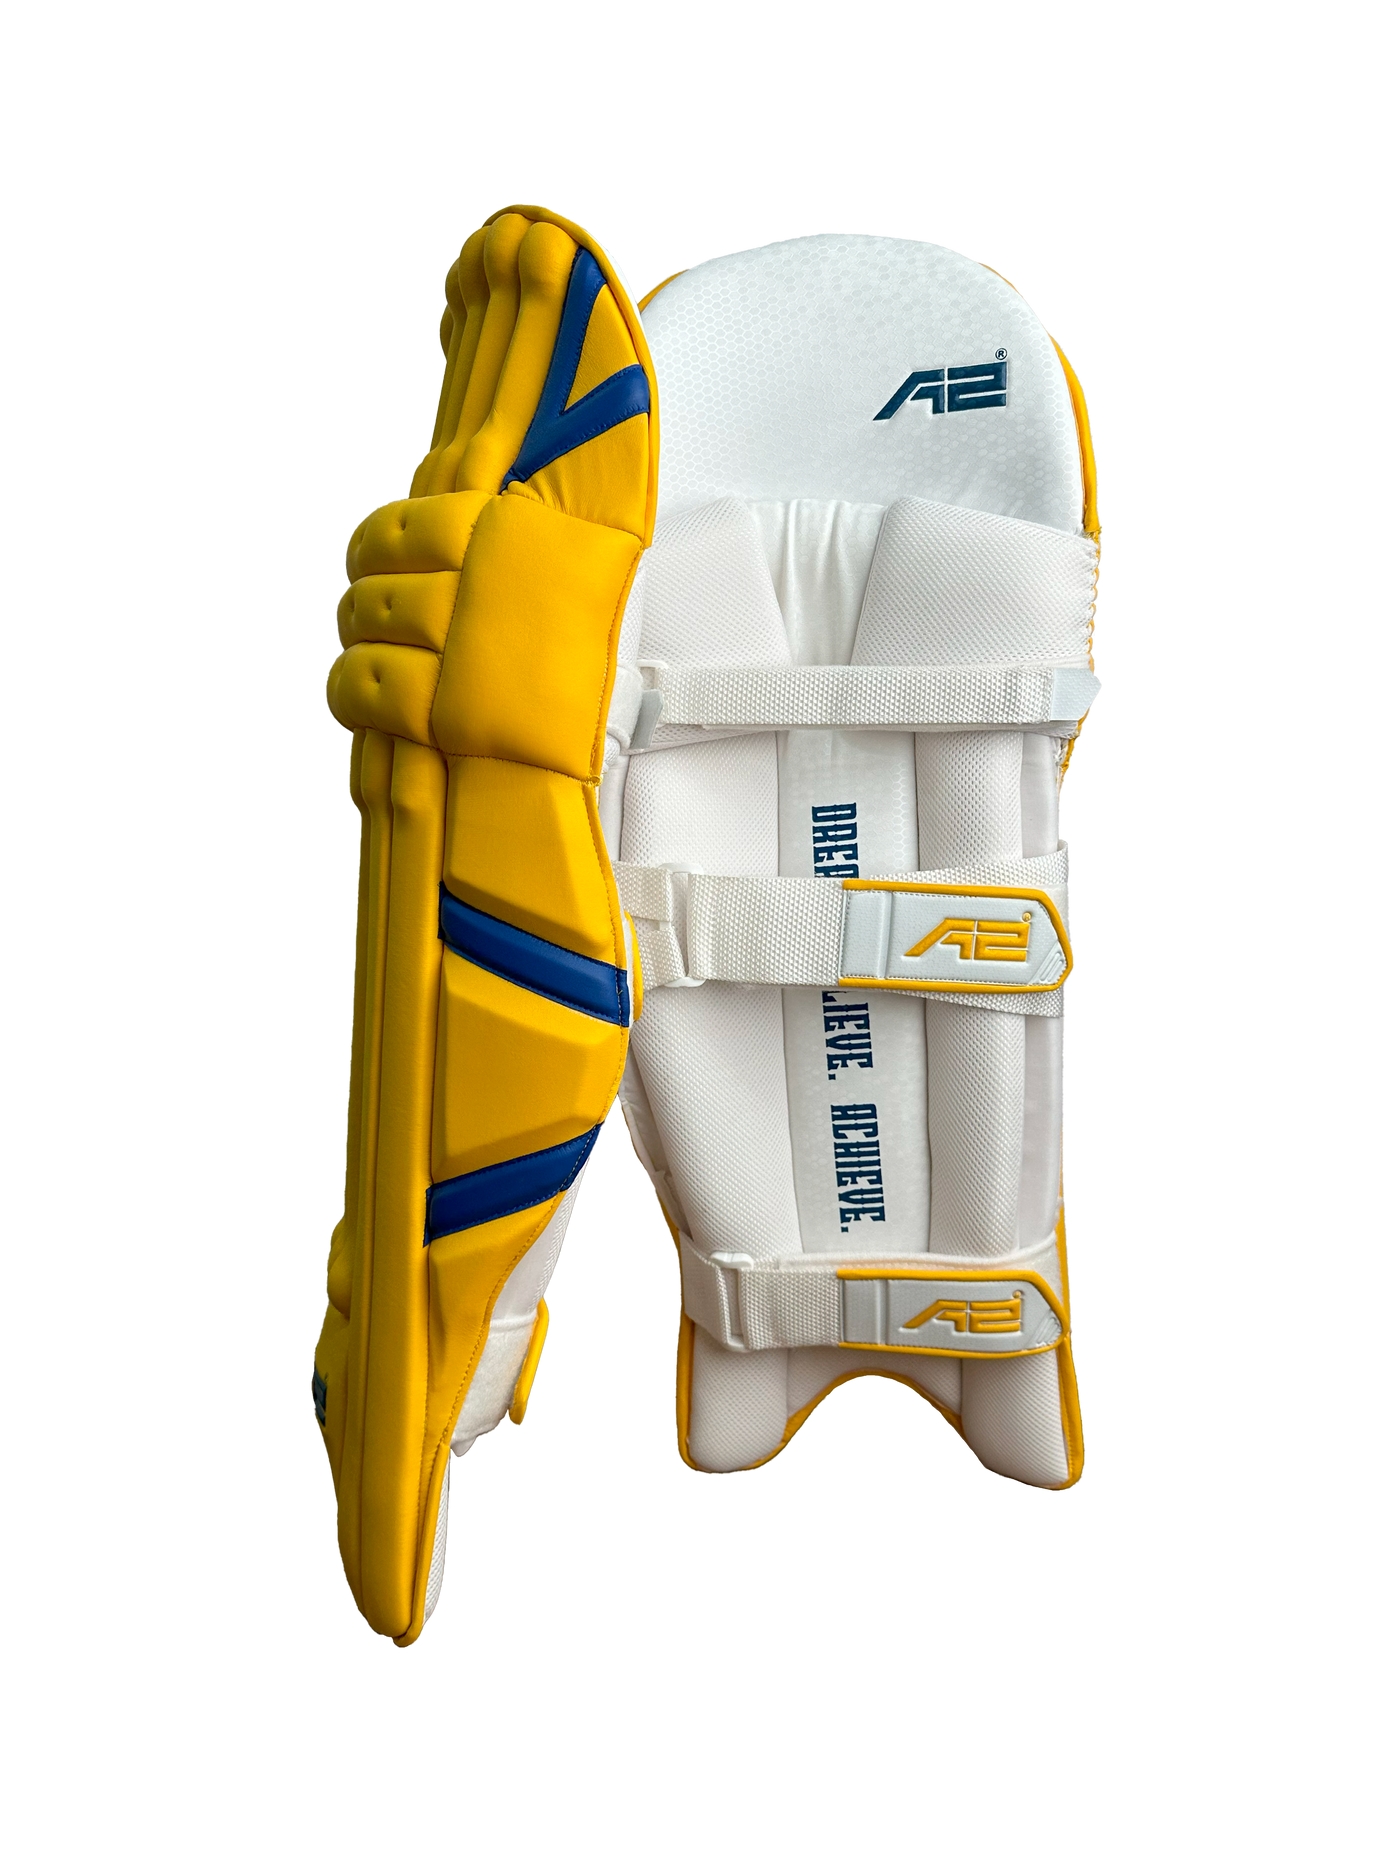 Cricket Batting Pads - Yellow & Blue